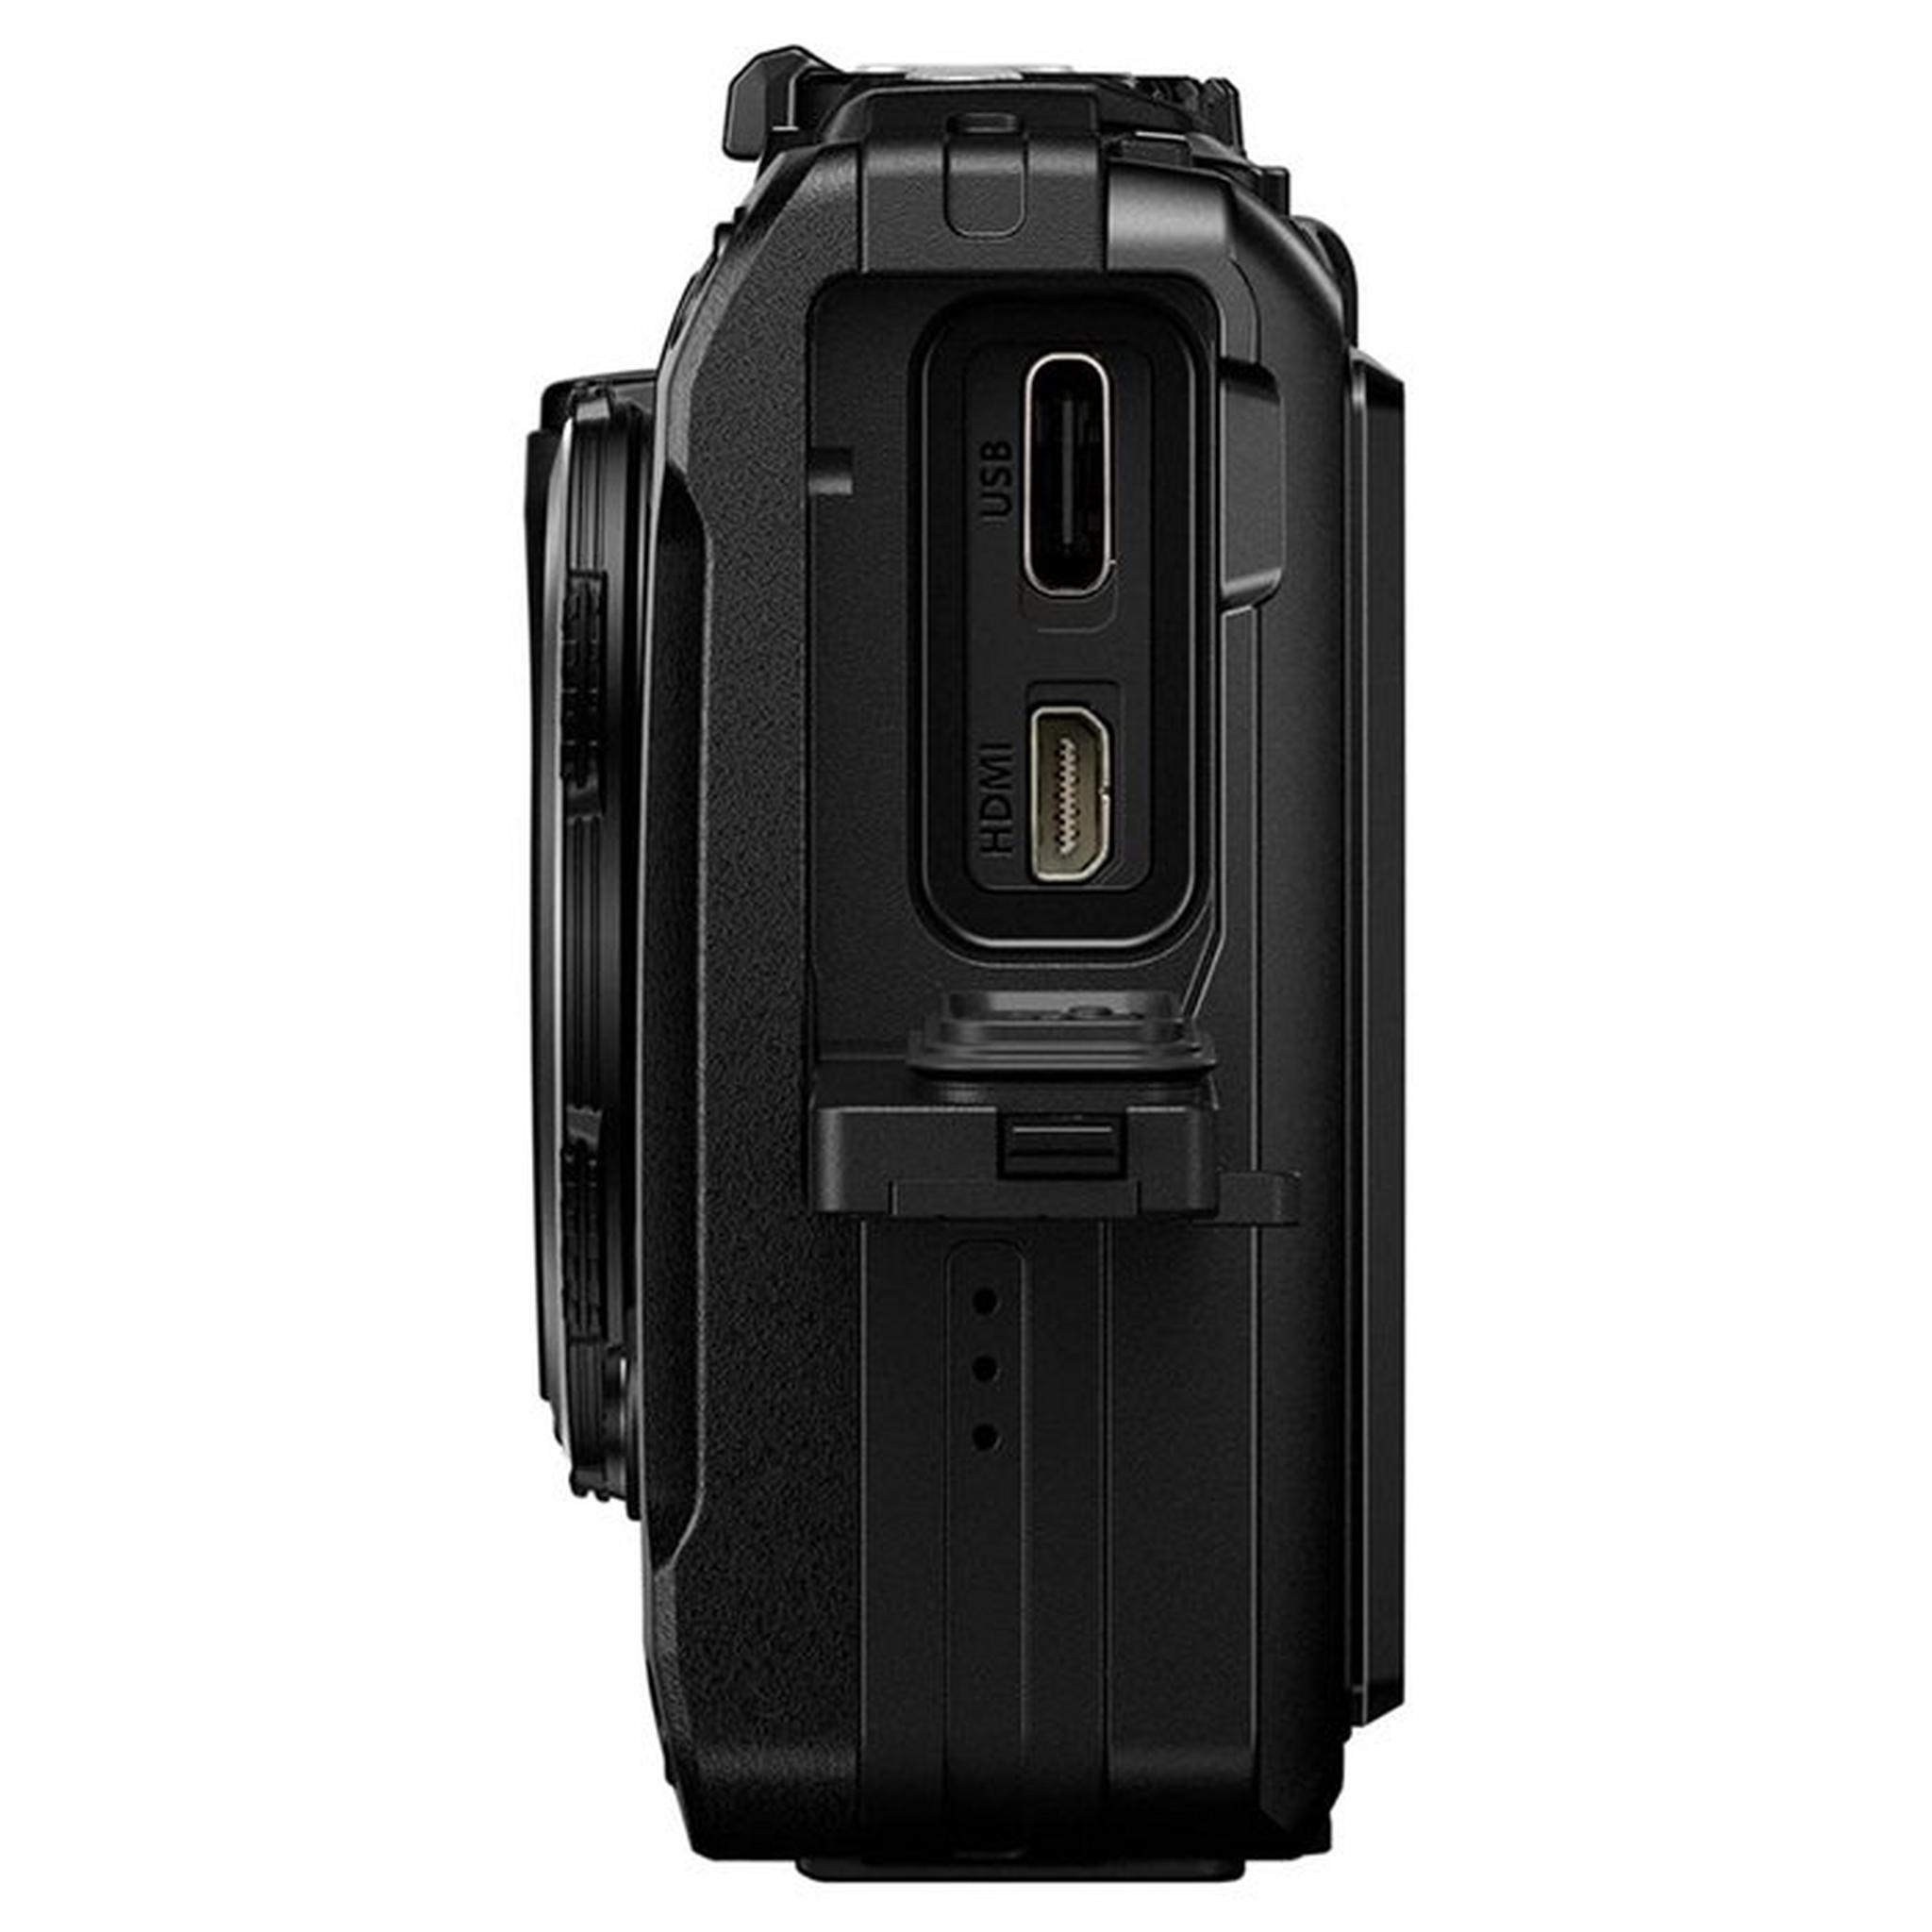 Olympus Om System TG7 Digital Camera, 12 MP, 25-200mm – Black